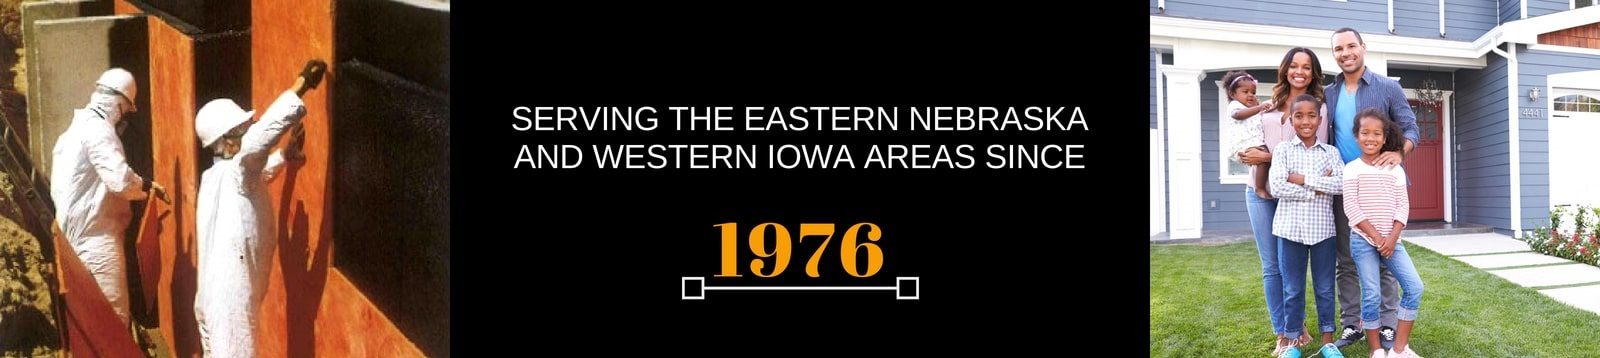 serving the eastern nebraska and western iowa areas since 1976